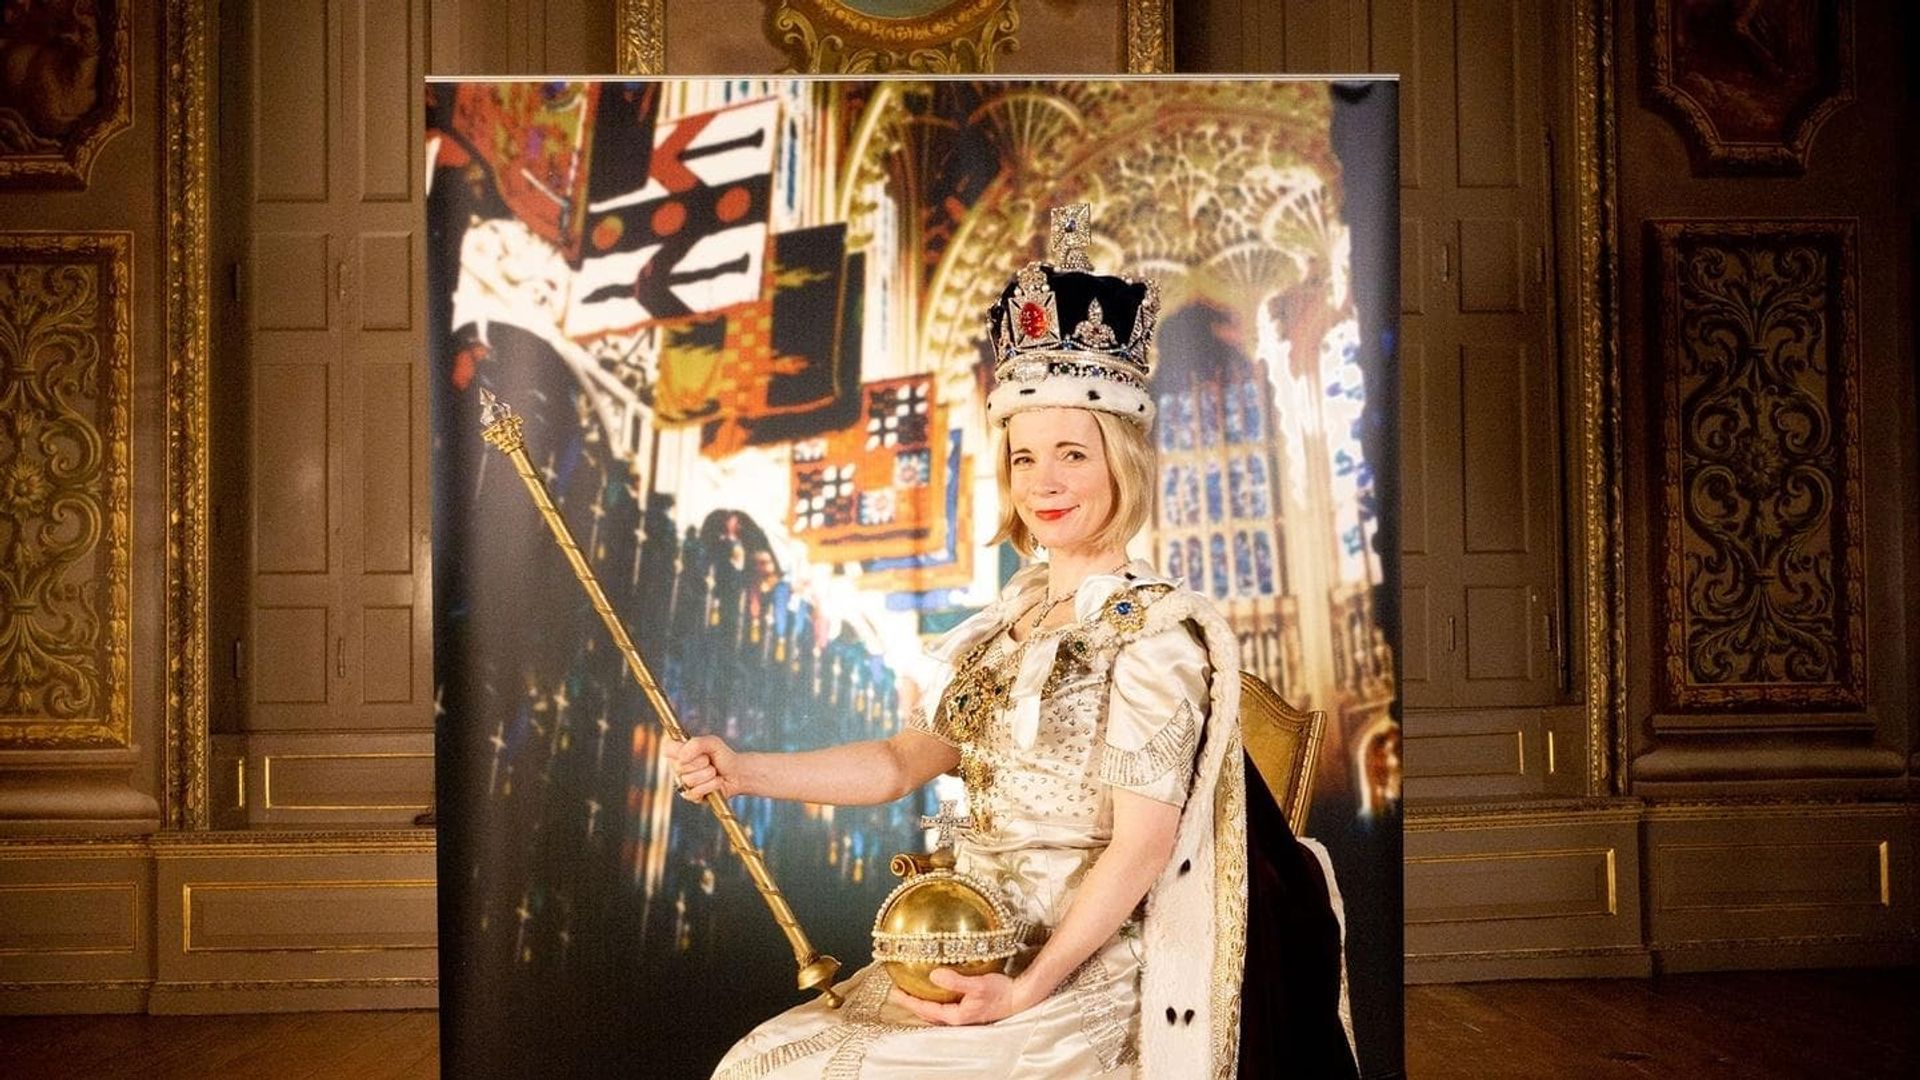 Lucy Worsley's Royal Photo Album background